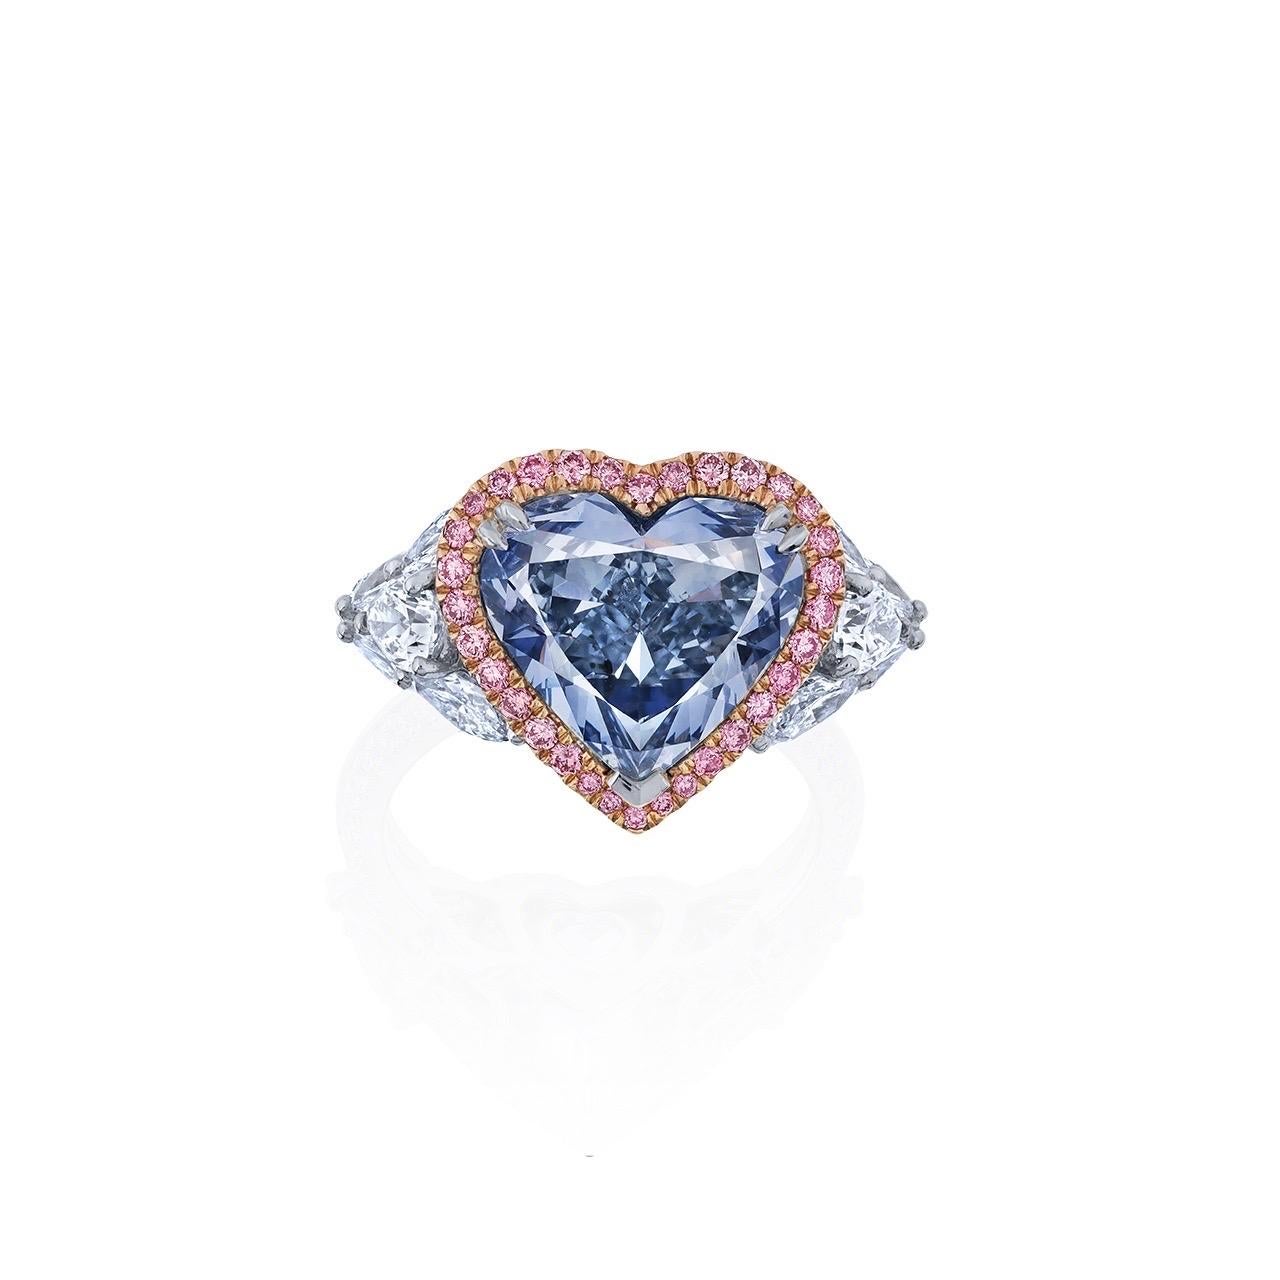 Main stone: 4.00 carat Fancy Grayish Blue, SI2, Heart

Setting: 32 pink diamonds totaling approximately 0.23 carats, 2 pear-cut white diamonds totaling approximately 0.47 carats, 8 marquise-cut white diamonds totaling approximately 1.02 carats, 48